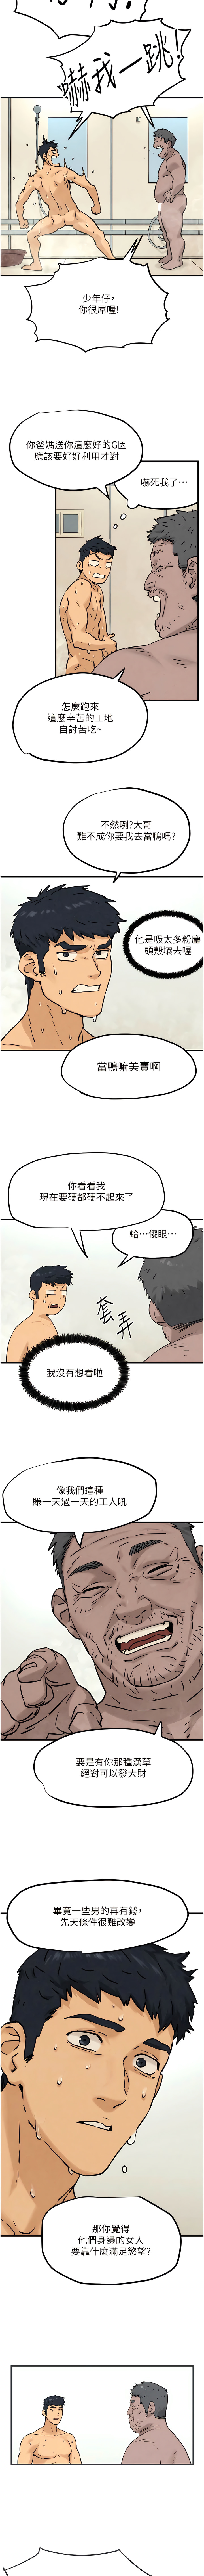 [洋世] 欲海交鋒 | 欲海交锋 1-13 [Chinese] [Ongoing] - Page 19